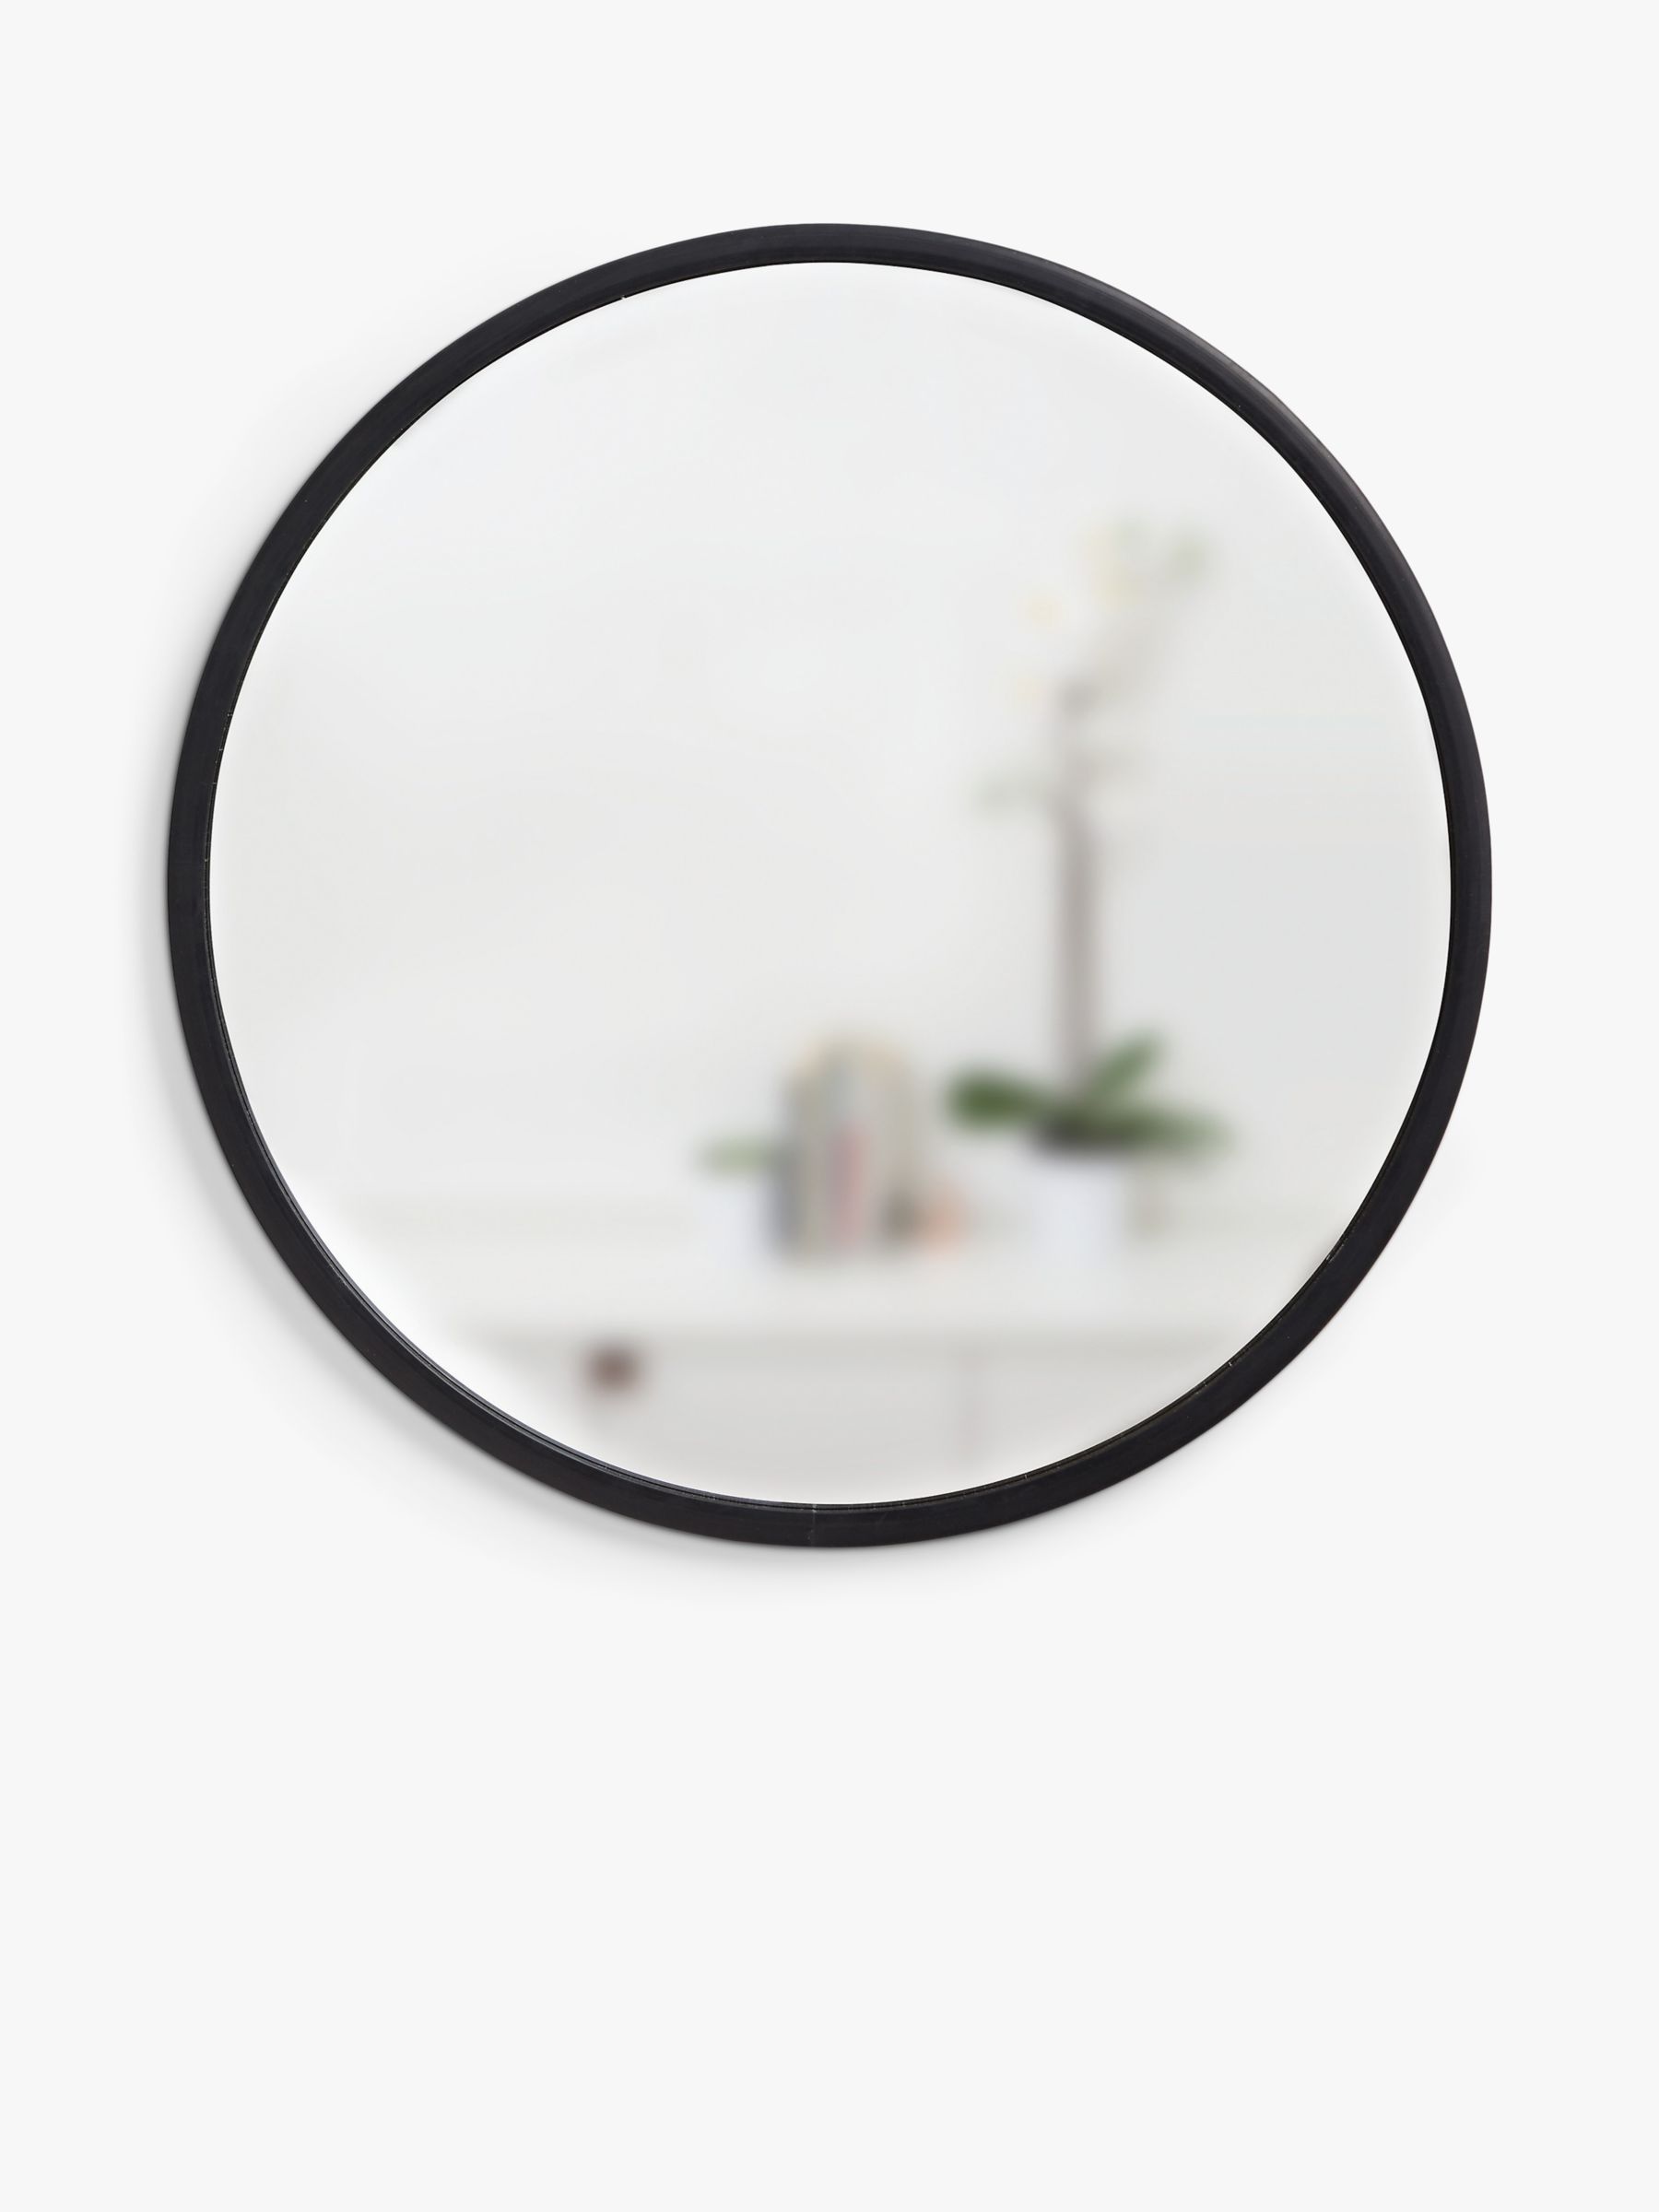 Umbra 18 Black Hub Decorative Round Wall Mirror